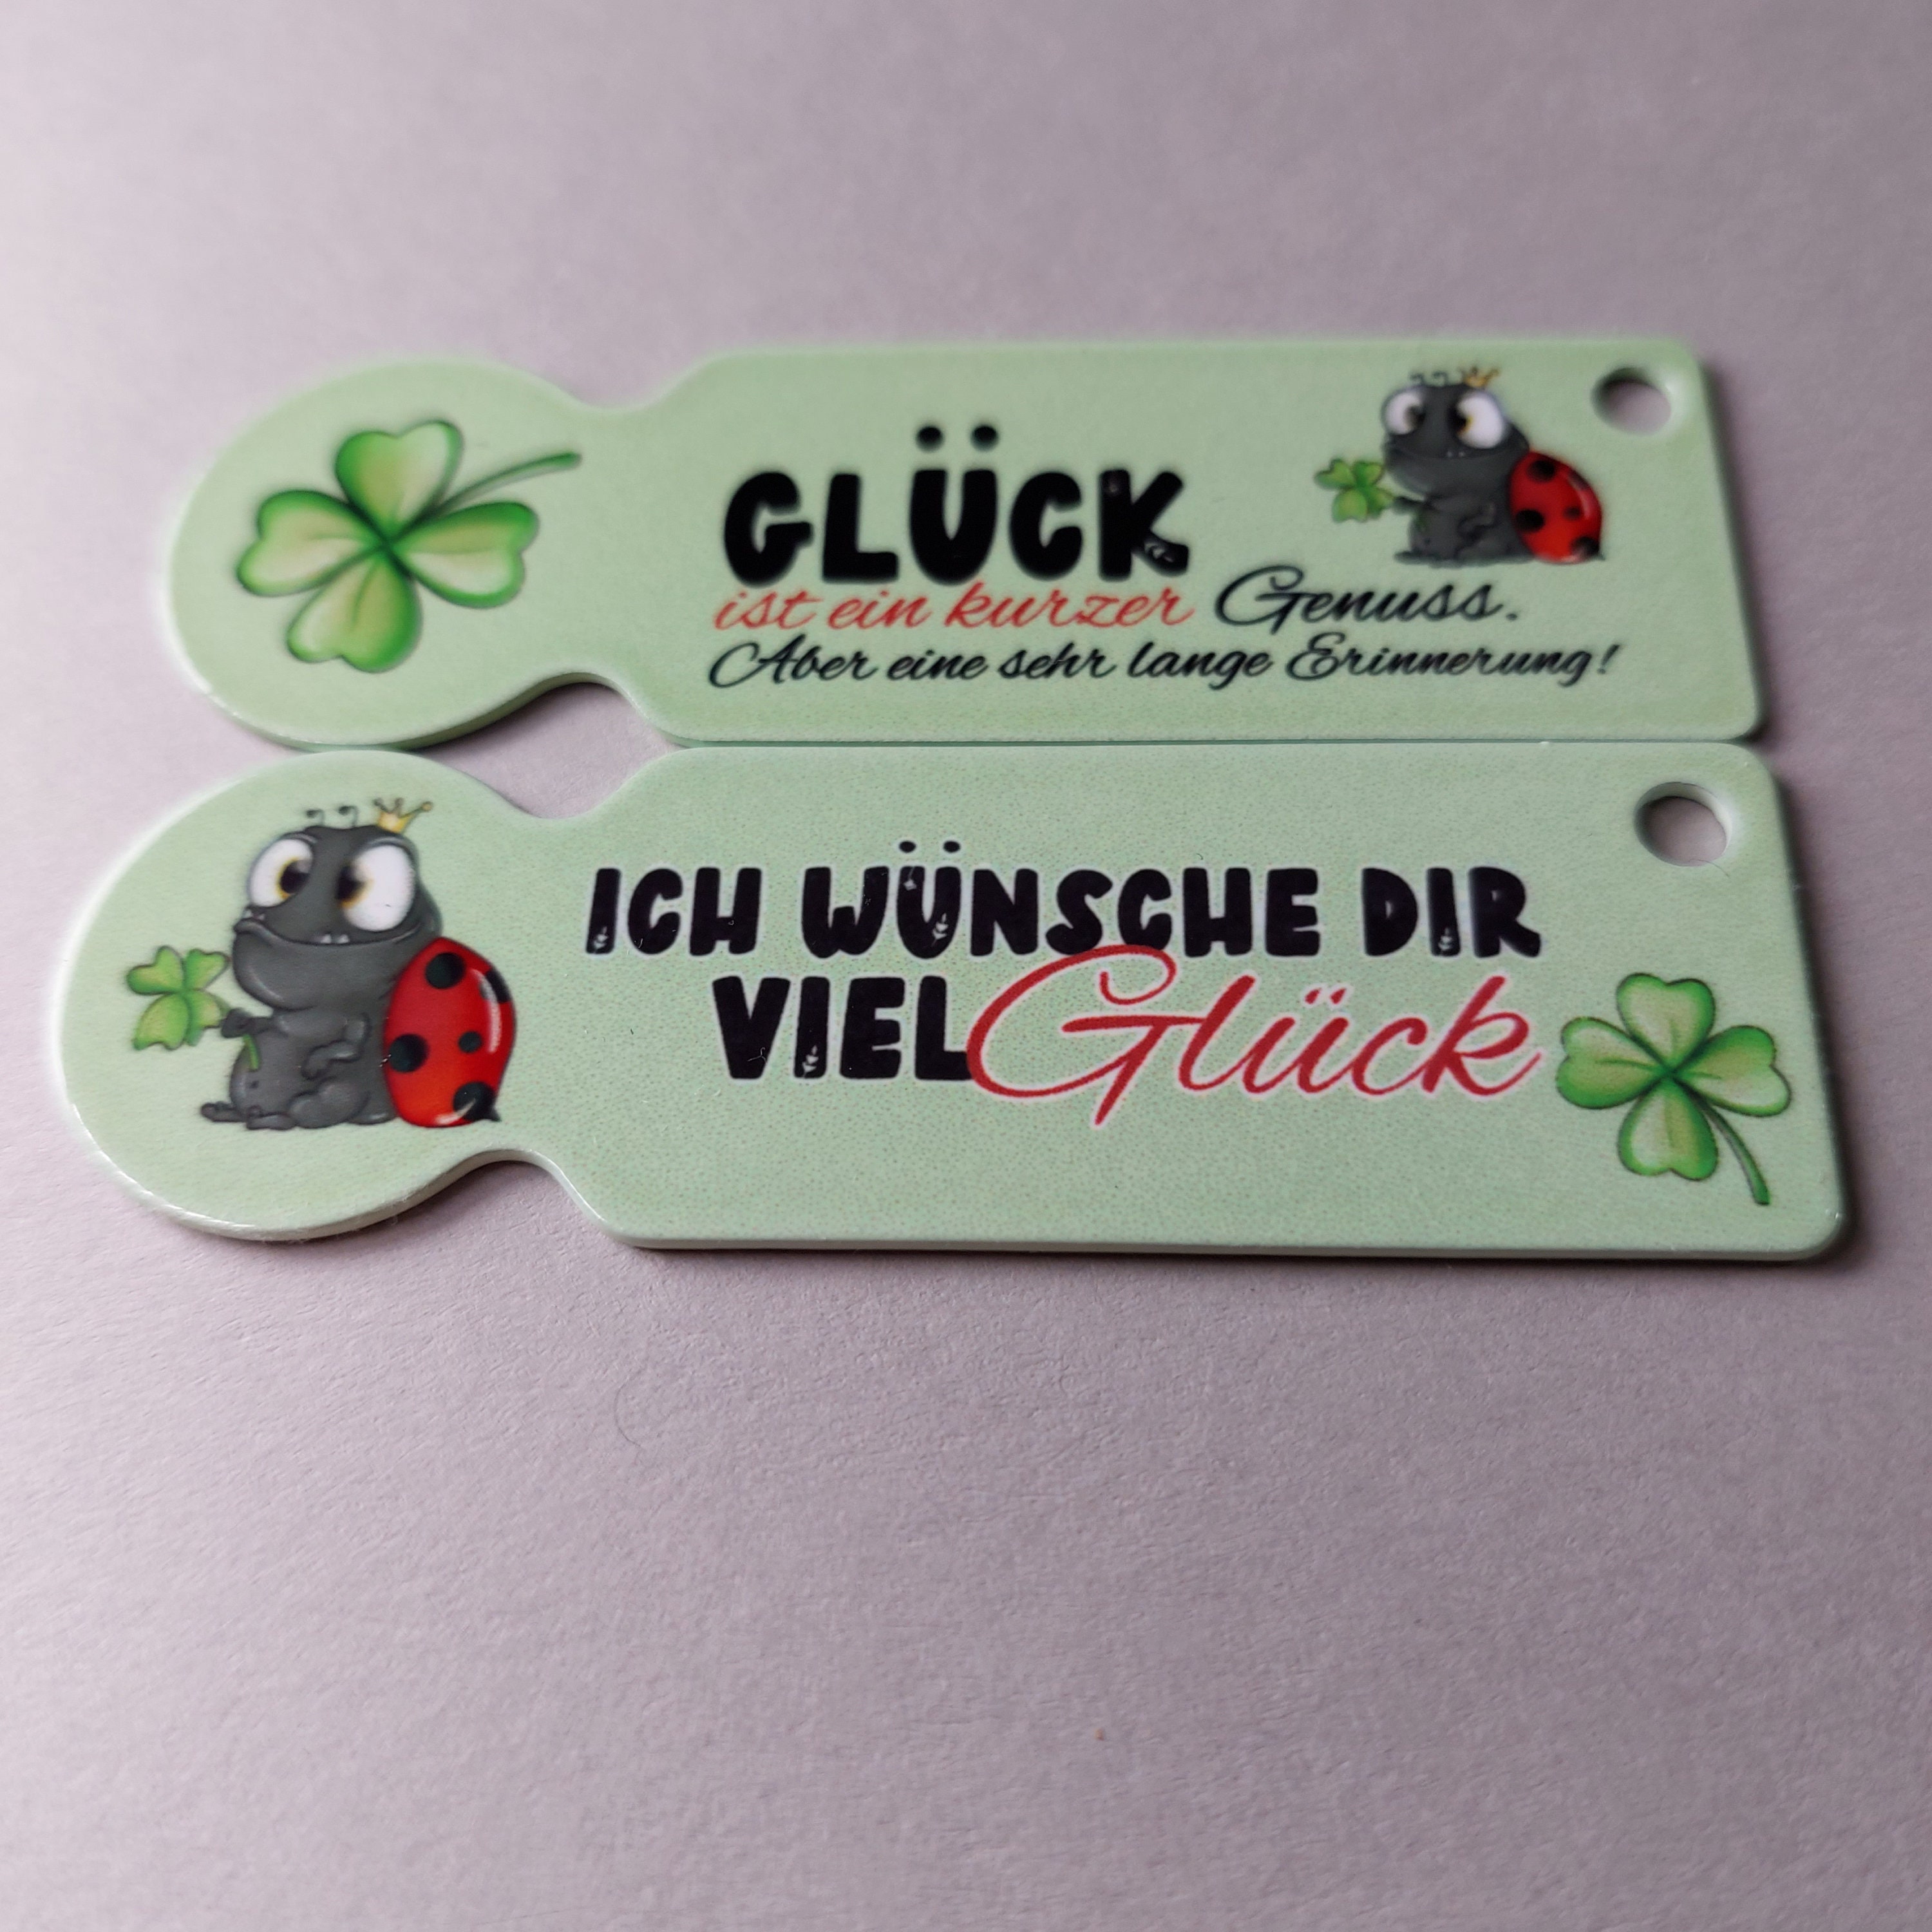 Wagenlöser, Einkaufswagenchip Glück, Glücksbringer, Marienkäfer, Kleeblatt,  Kleeblätter - .de